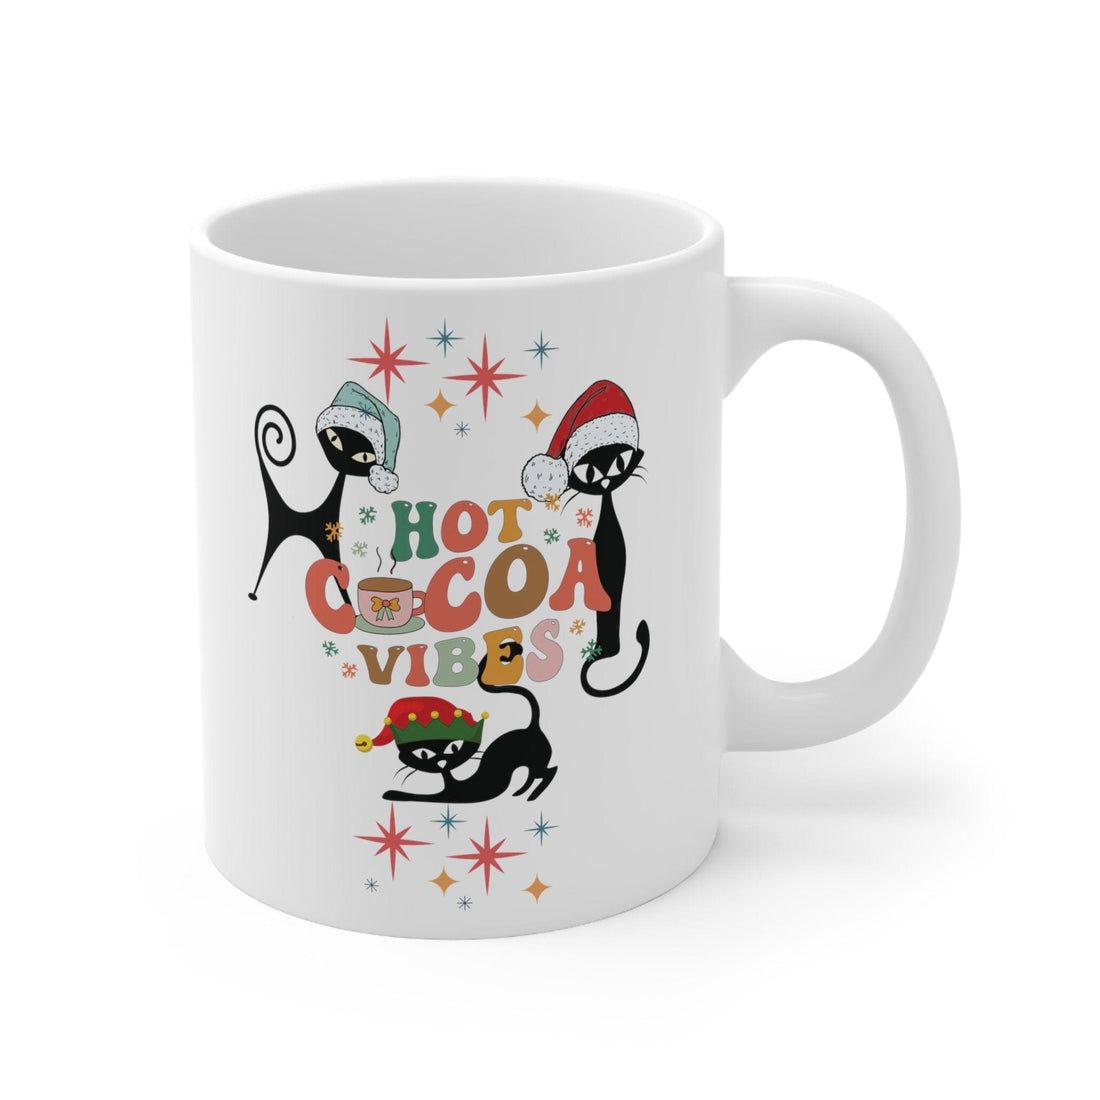 Kate McEnroe New York Atomic Kitschy Cat Christmas Mug - Mid Century Modern Starburst Boho Holiday Drinkware - Hot Cocoa VibesMugs21780554224682647697